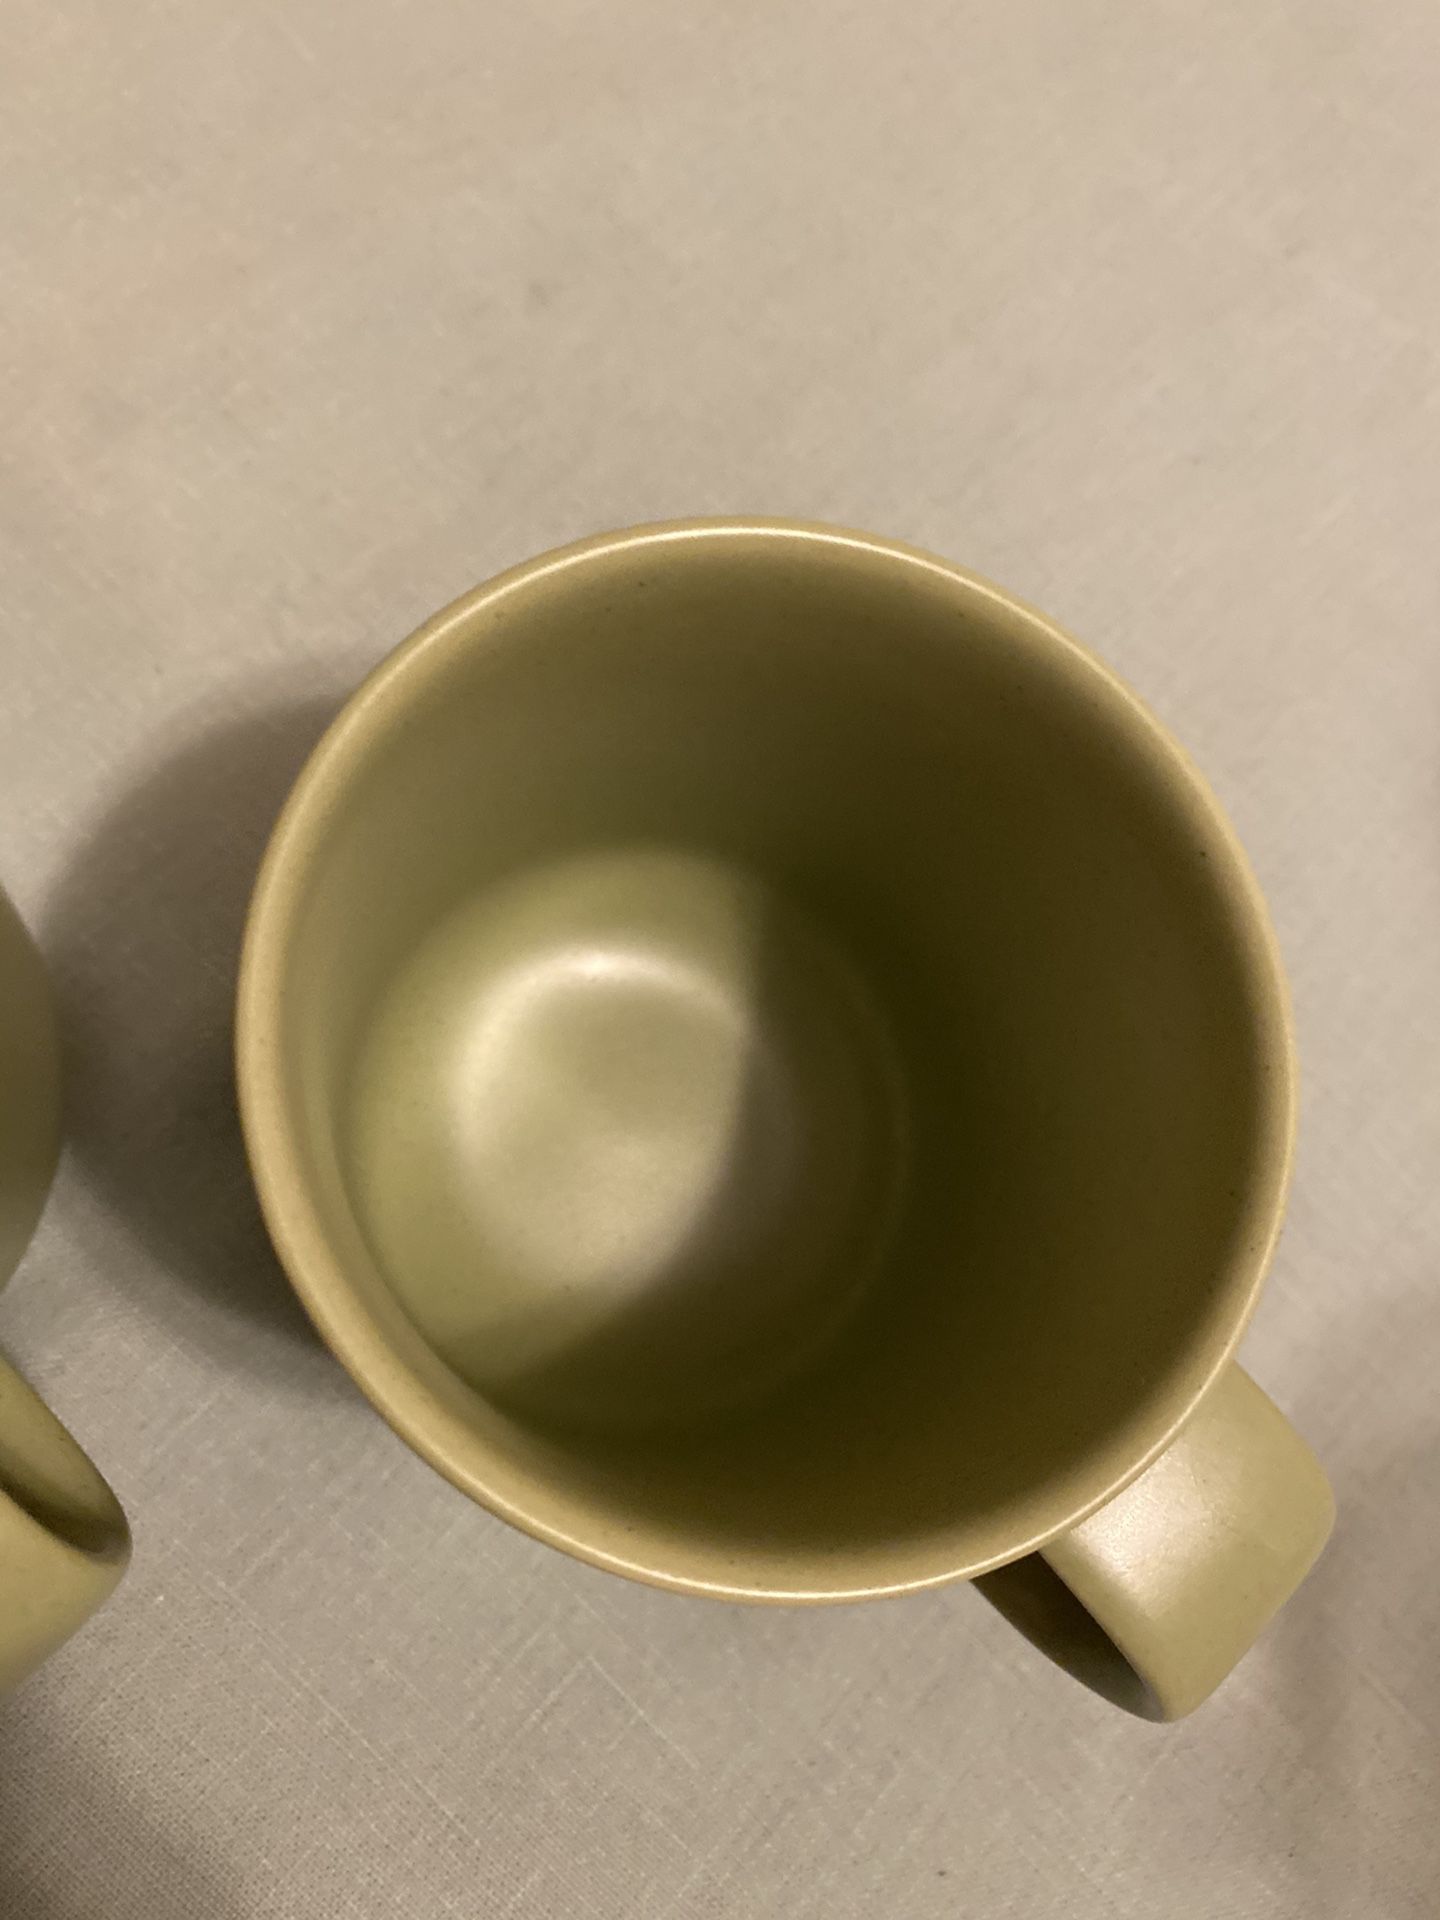 Nice morning tea cups (2)